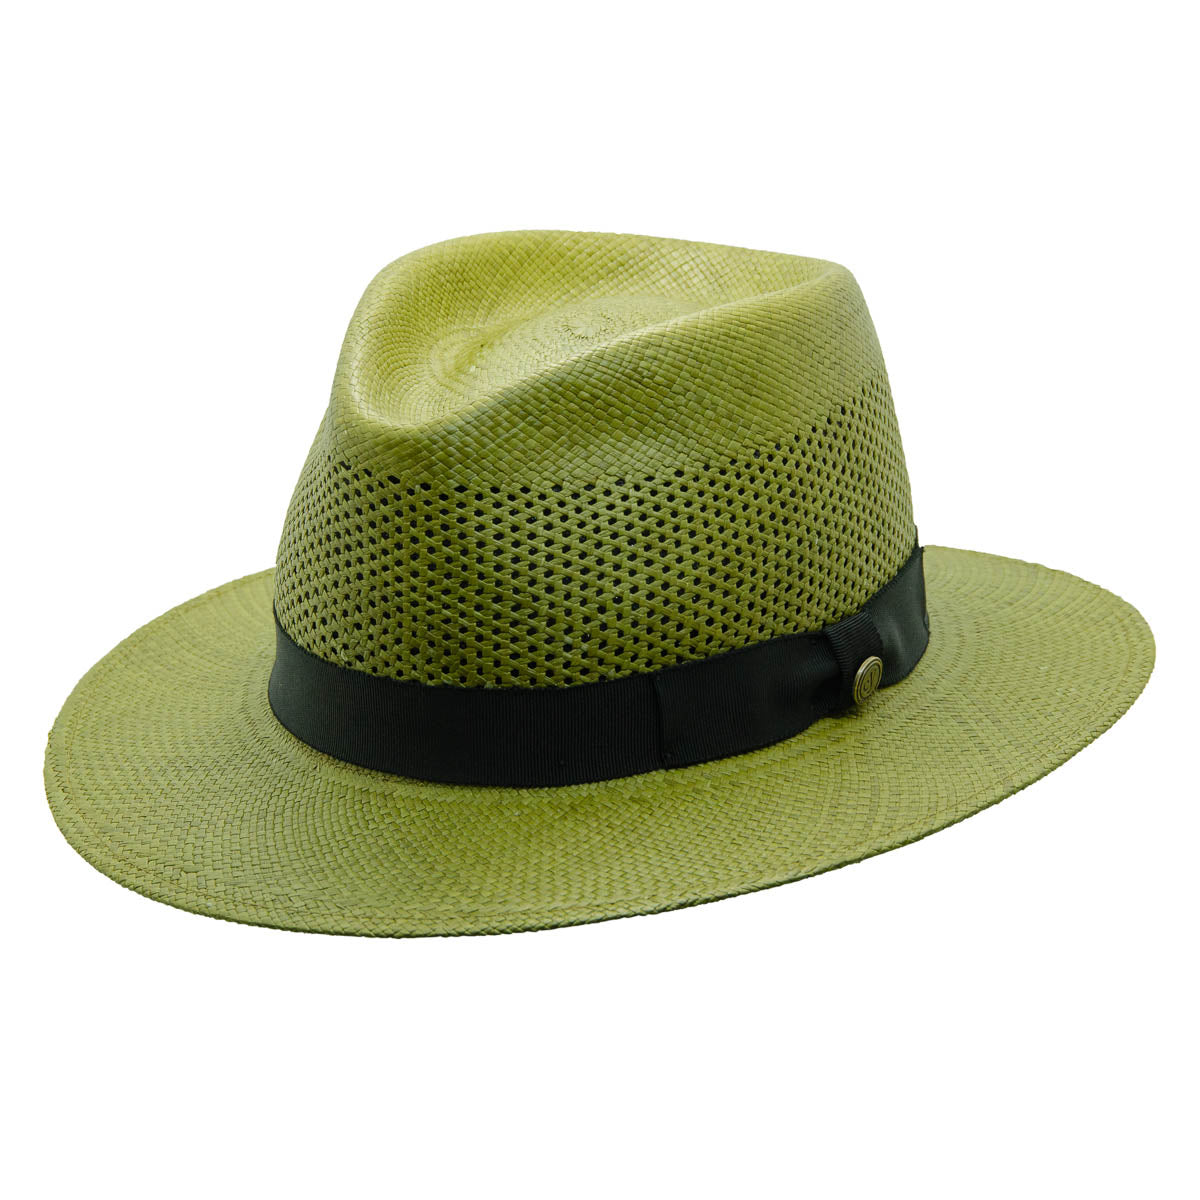 Varon Classic Fresh Crown | Panama Hat